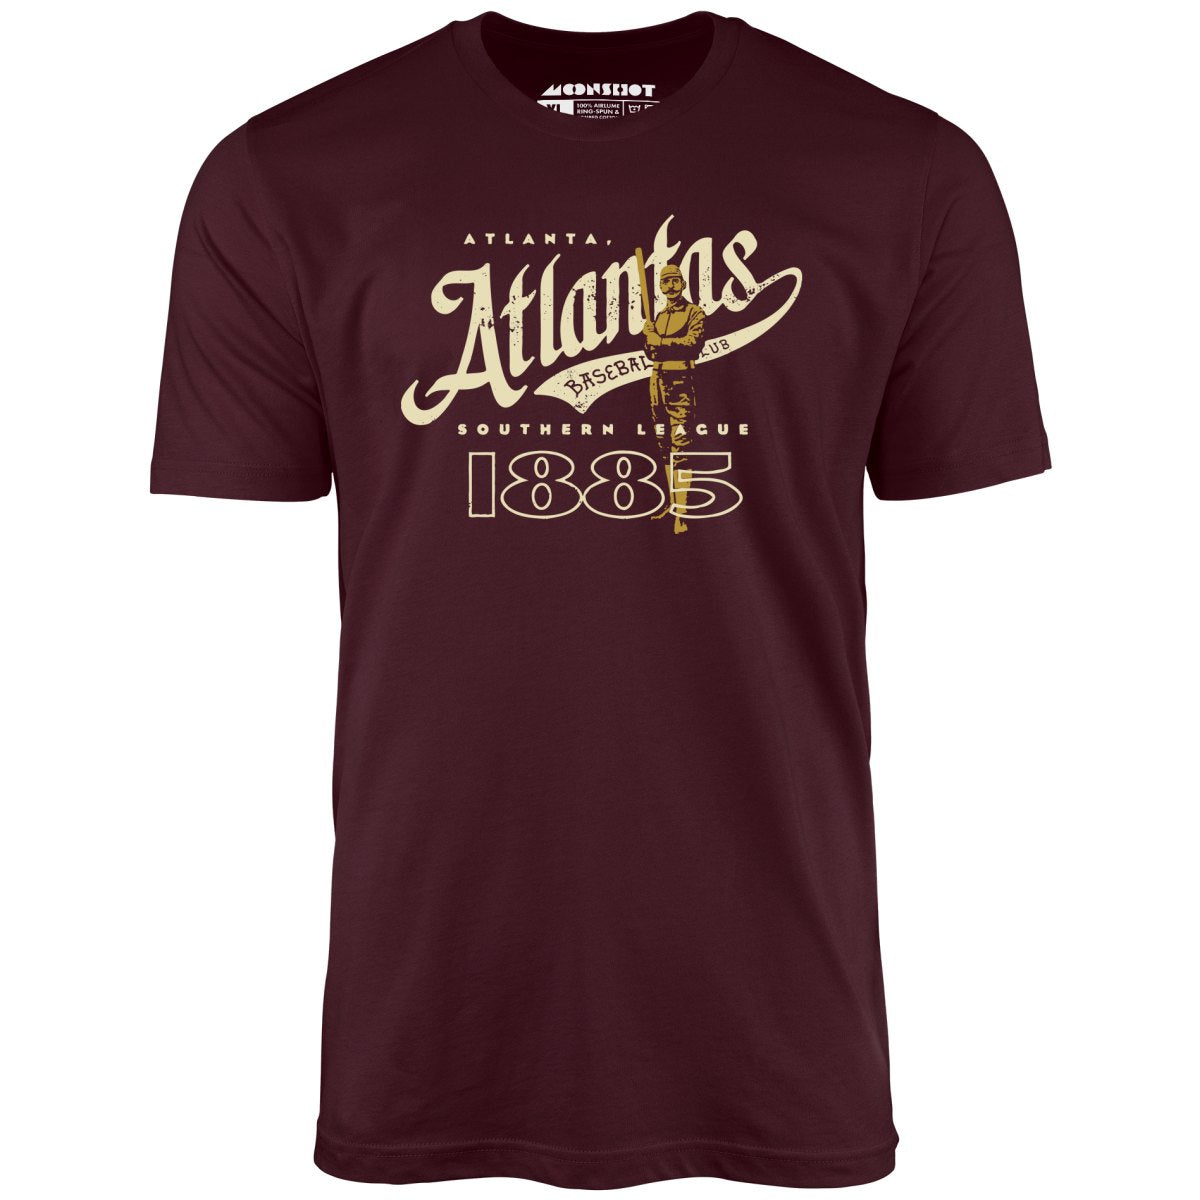 Atlanta Atlantas - Georgia - Vintage Defunct Baseball Teams - Unisex T-Shirt